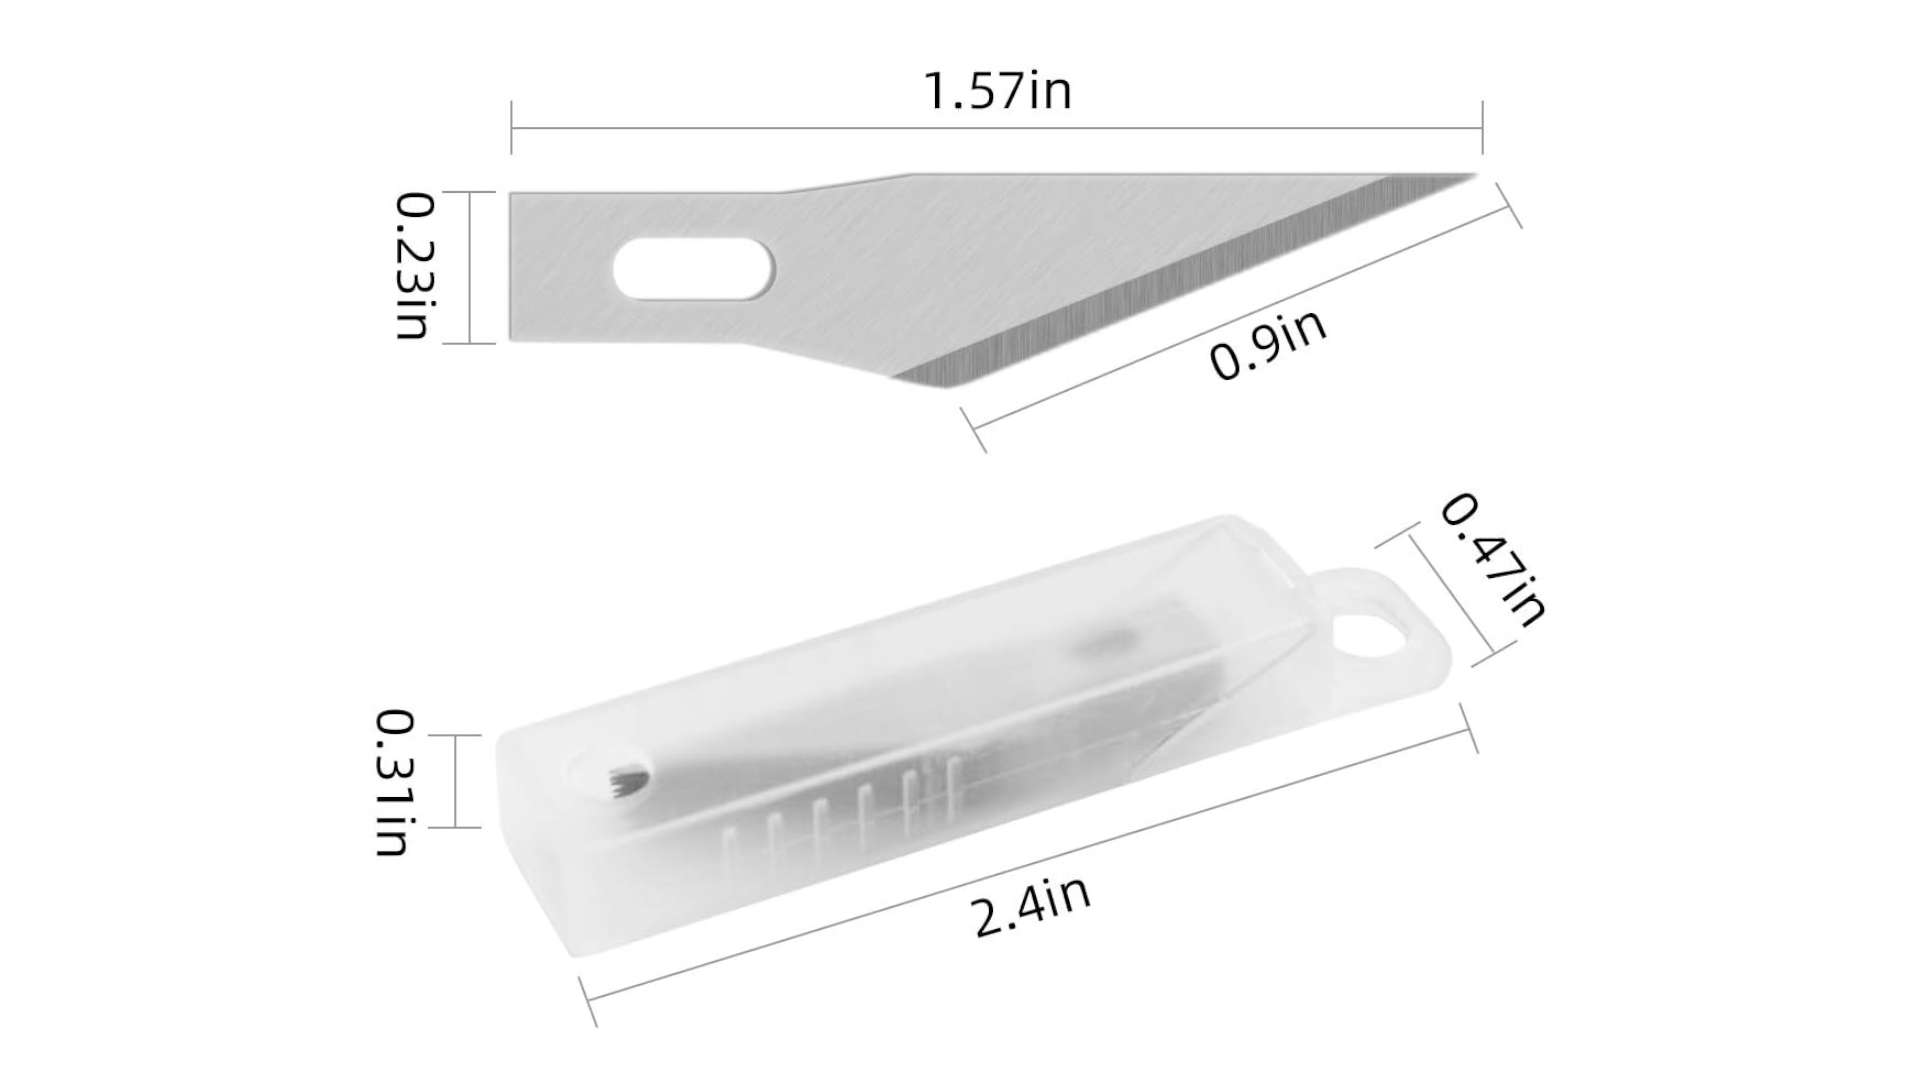 WINONS Hot Knife Cutting Tool, WHK0007 Hot Knife Plastic Cutter